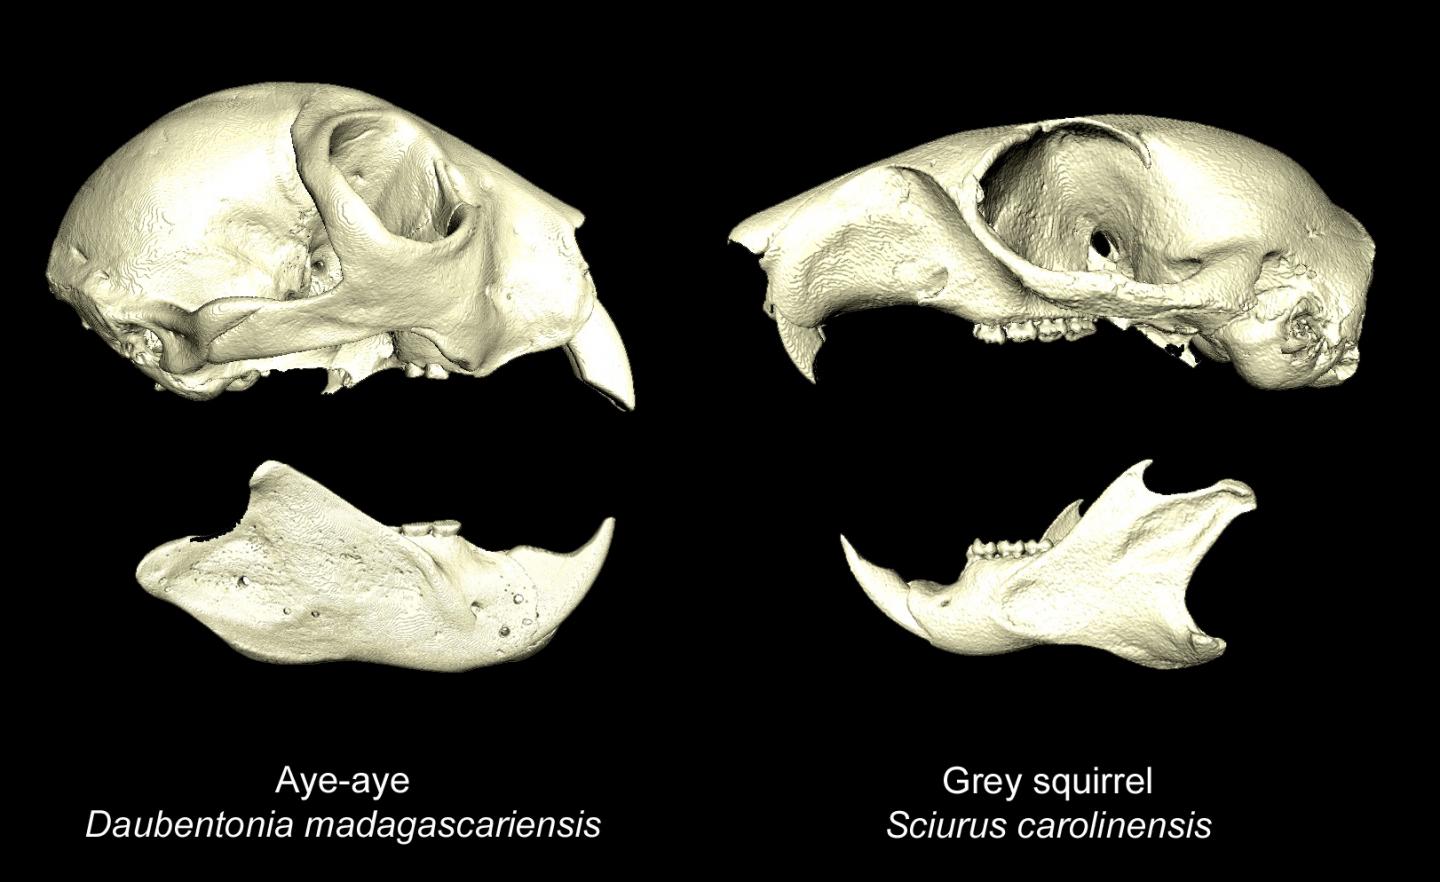 3D Models of Aye-Aye and Squirrel Skulls